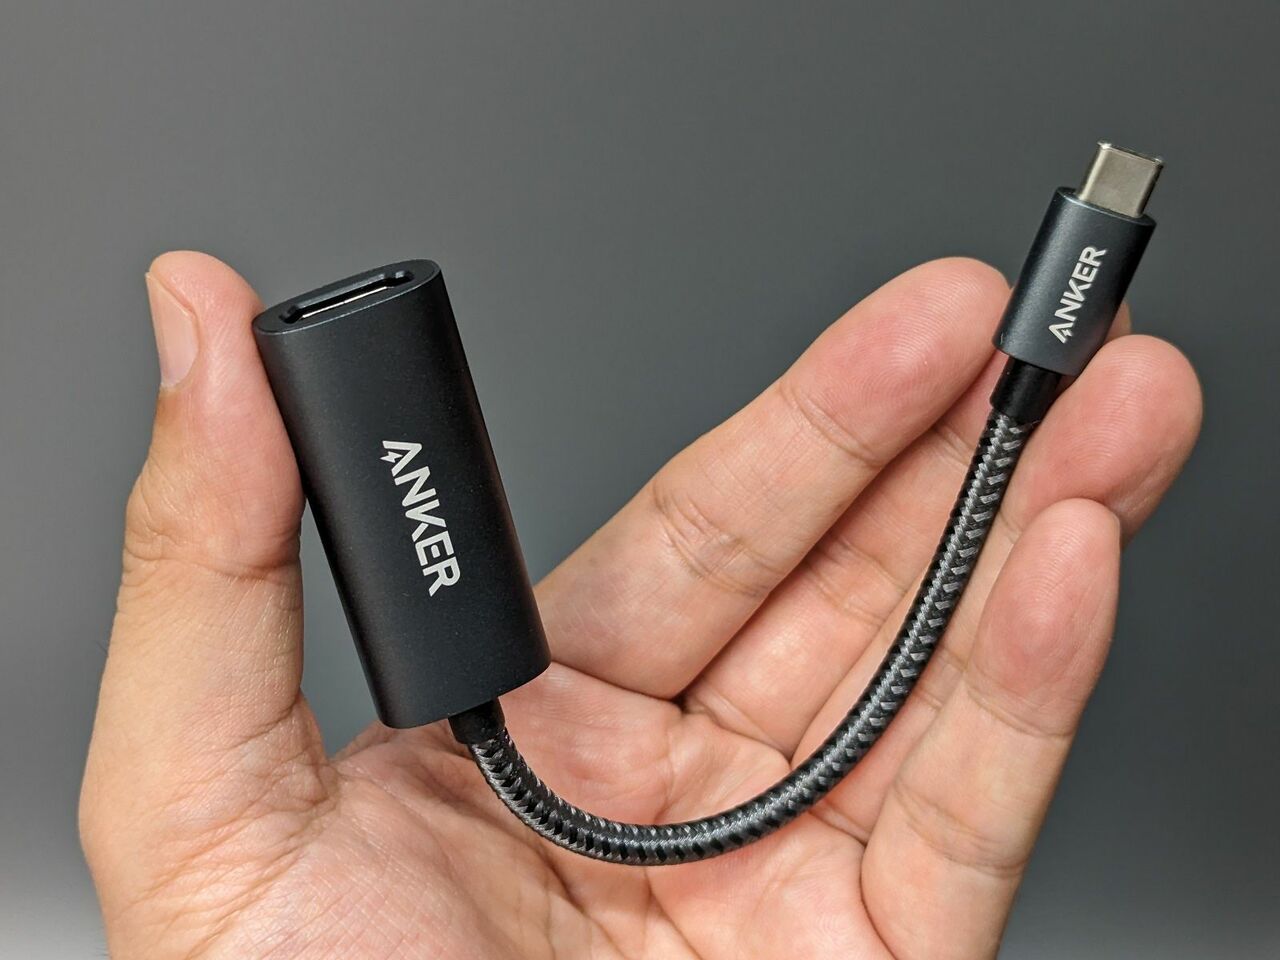 「Anker PowerExpand+ USB-C & HDMI 変換アダプタ」。USB Type-CをHDMIに変換するアダプタです